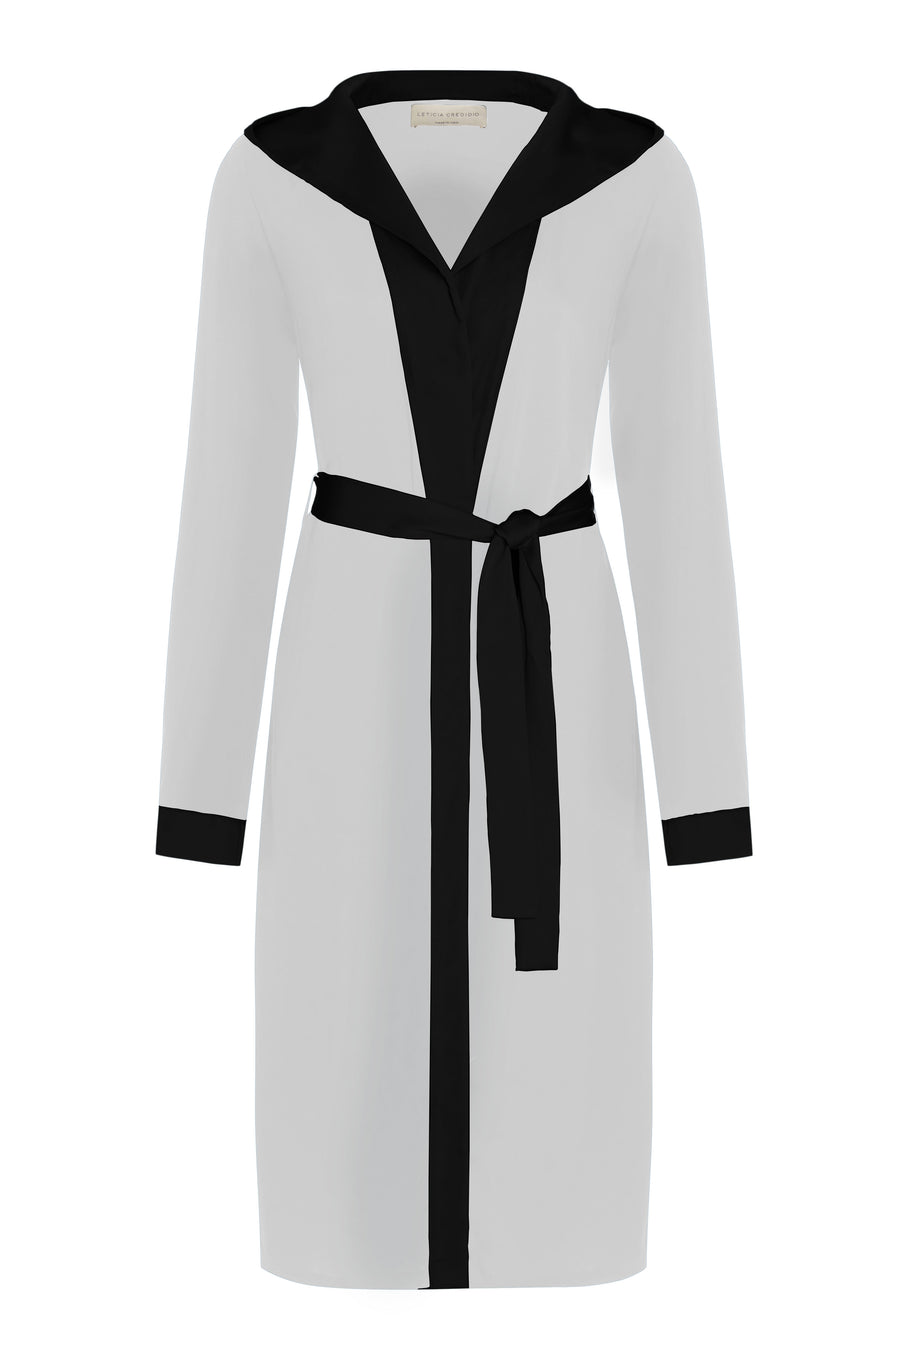 Women's loungewear - Black and white vegan silk nightgown